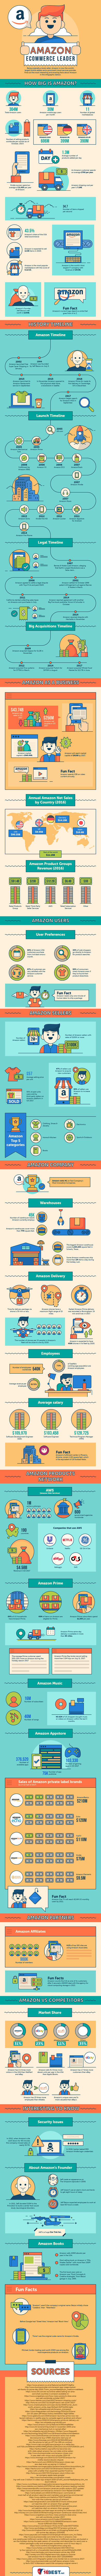 Infographic underscoring how hard it is to beat Amazon.